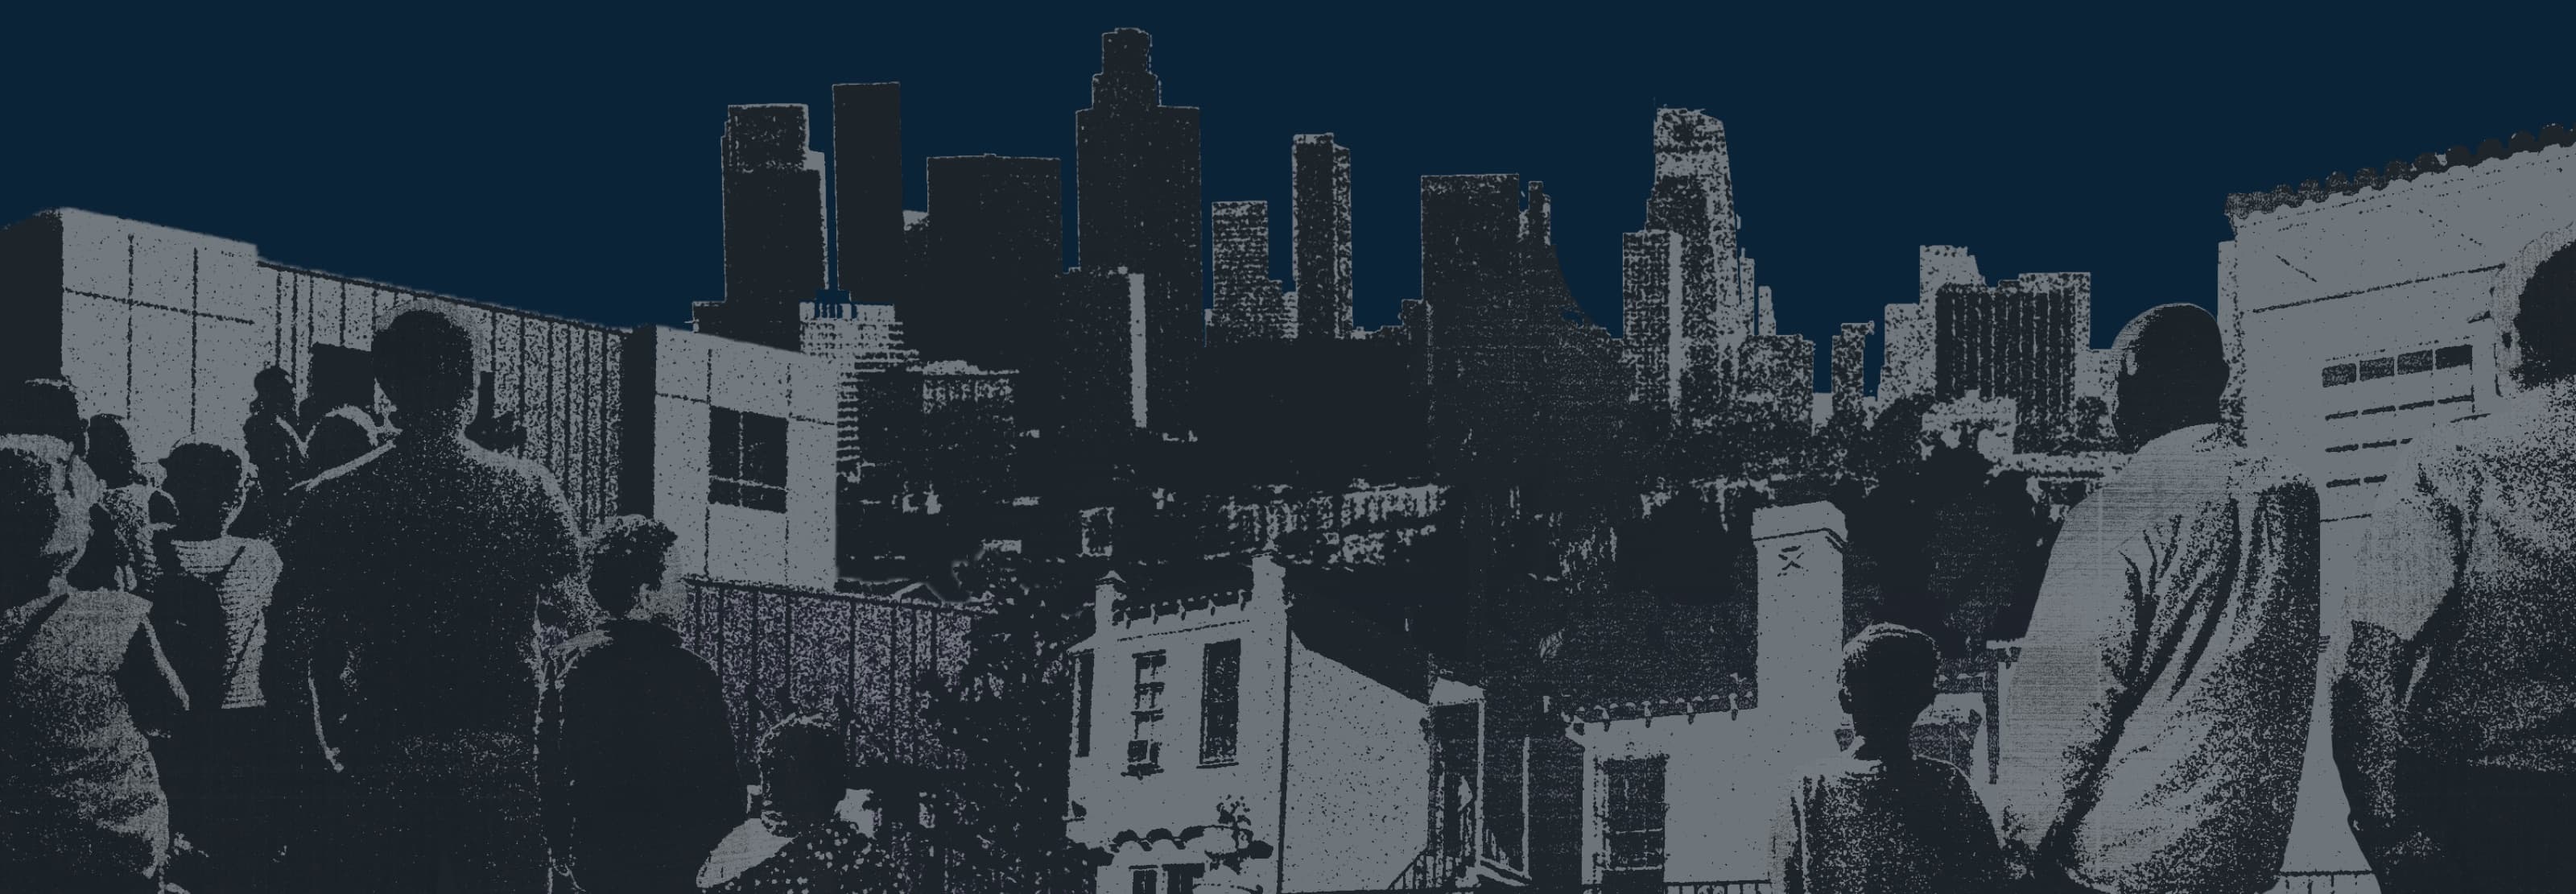 Los Angeles city background